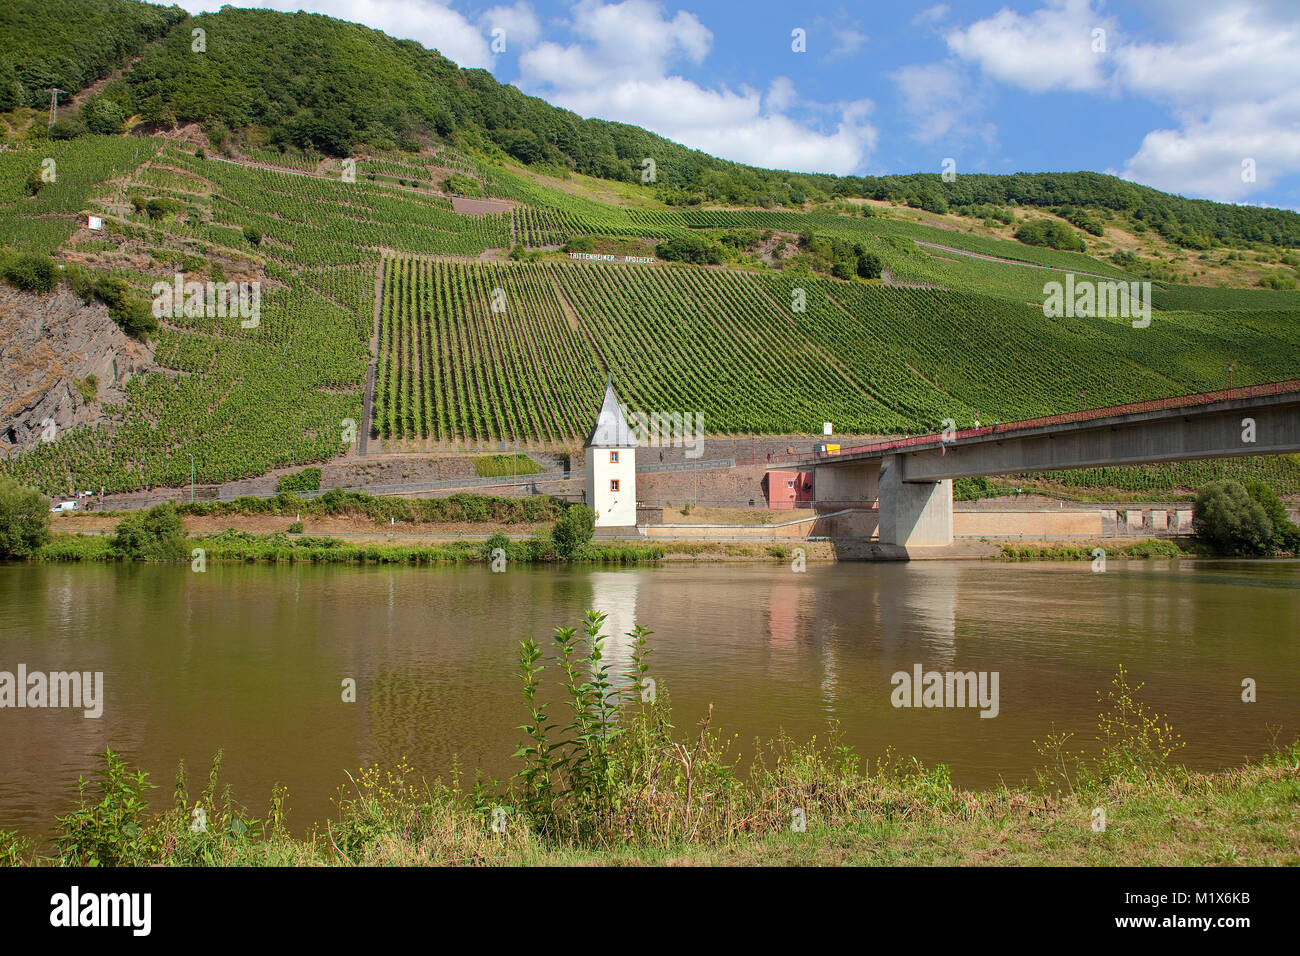 Vineyard, wine growing, Moselle bridge and ferry tower at wine village Trittenheim, Moselle river, Rhineland-Palatinate, Germany, Europe Stock Photo